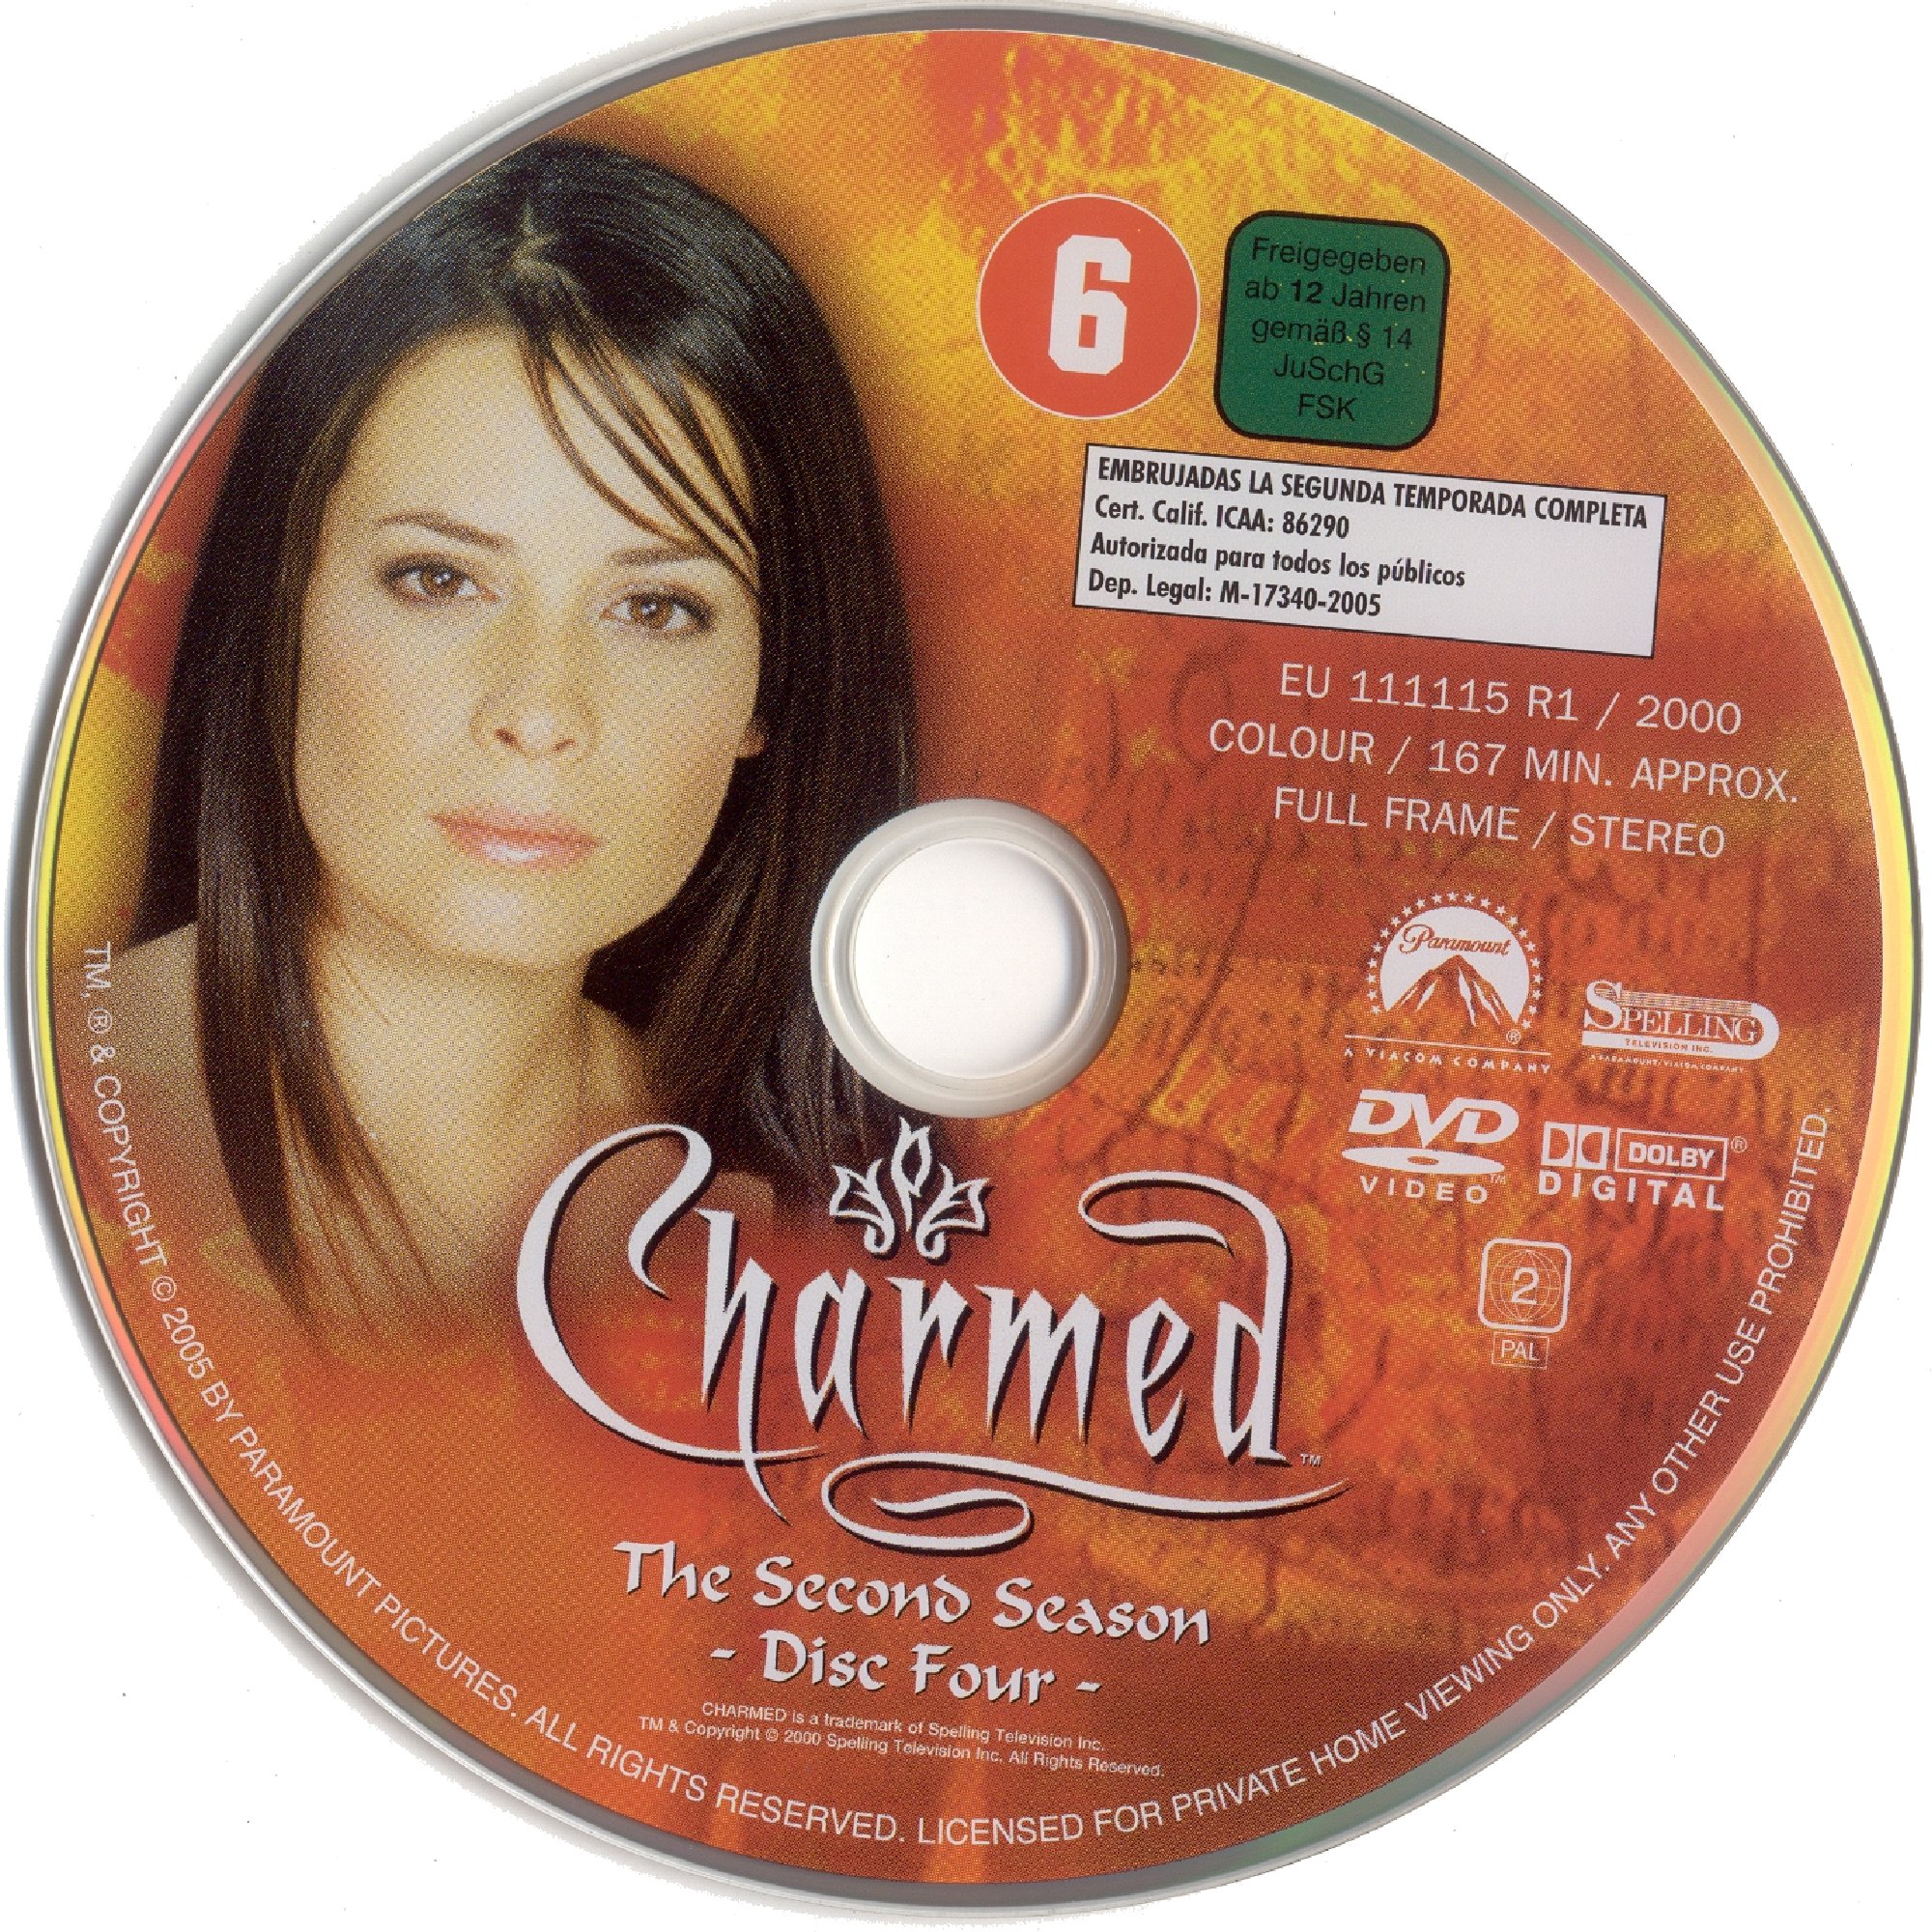 Charmed Saison 2 dvd 4